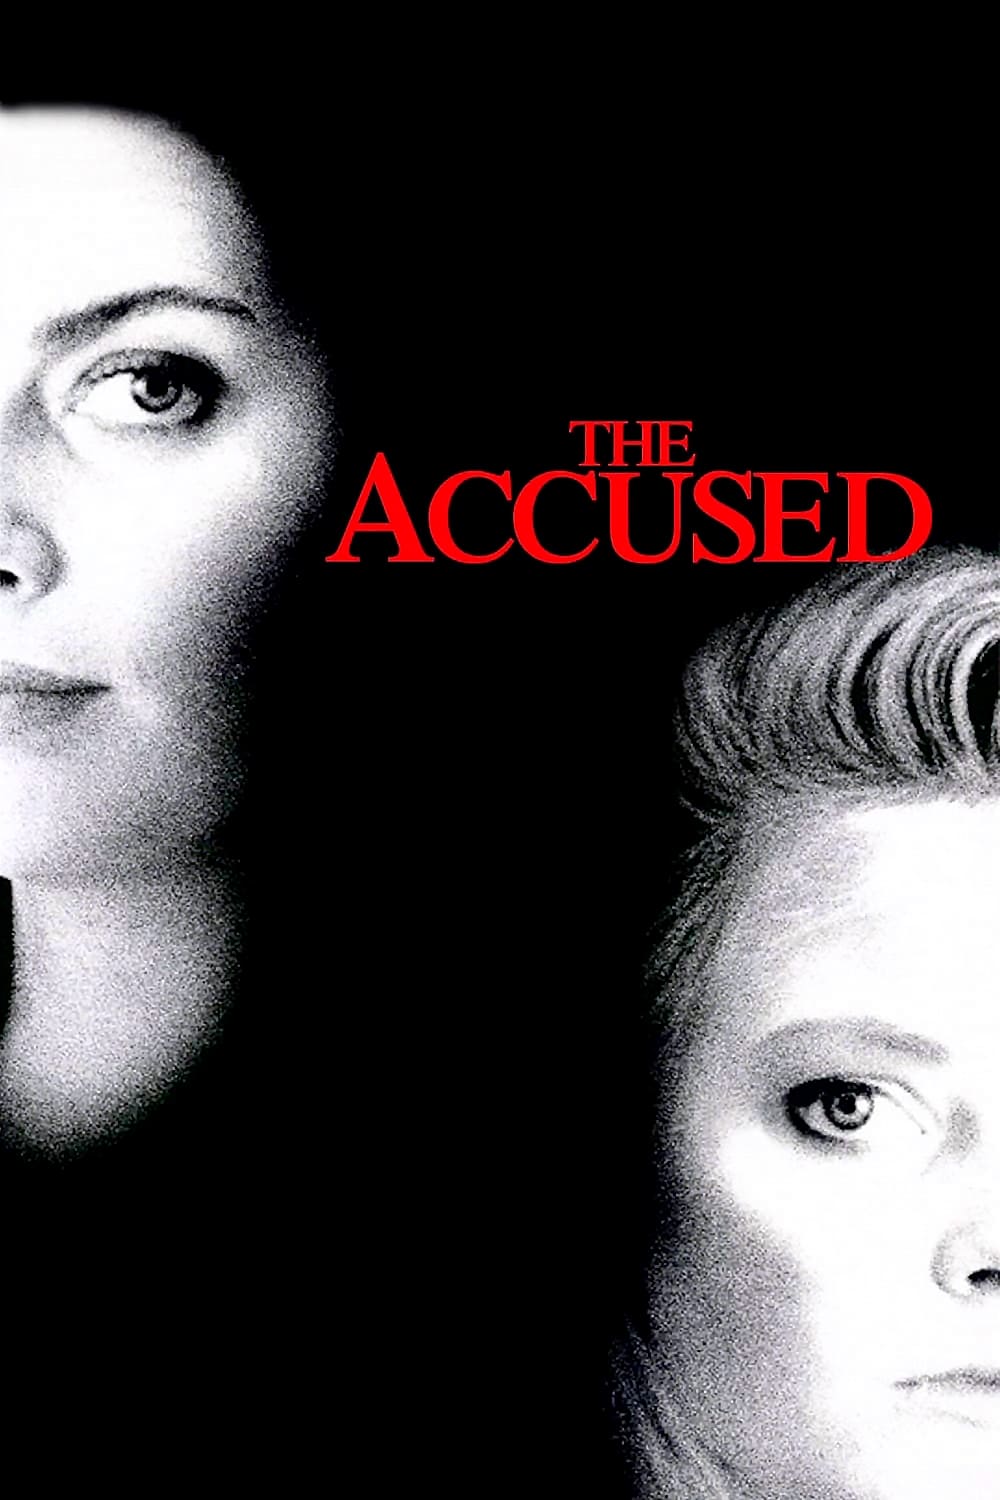 Les Accusés (1988)